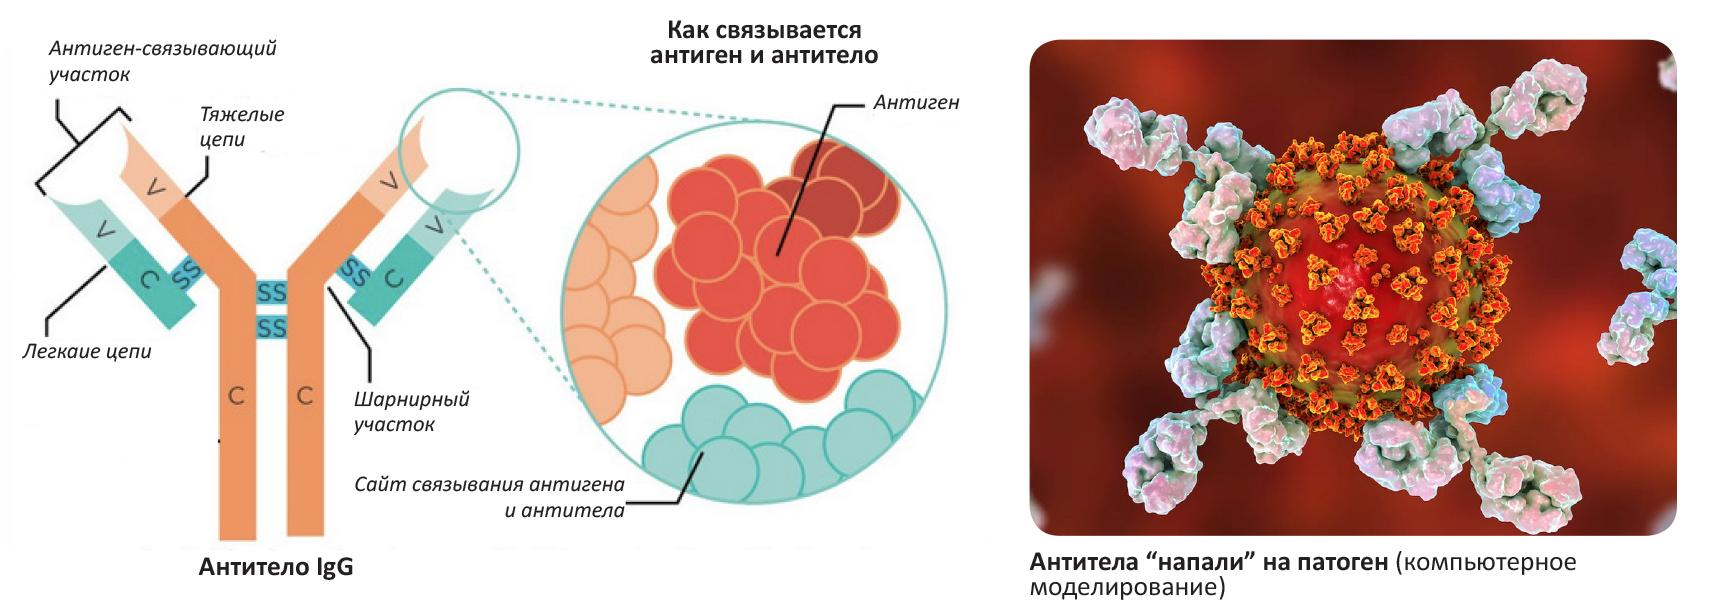 Взаимодействие антитела и антигена